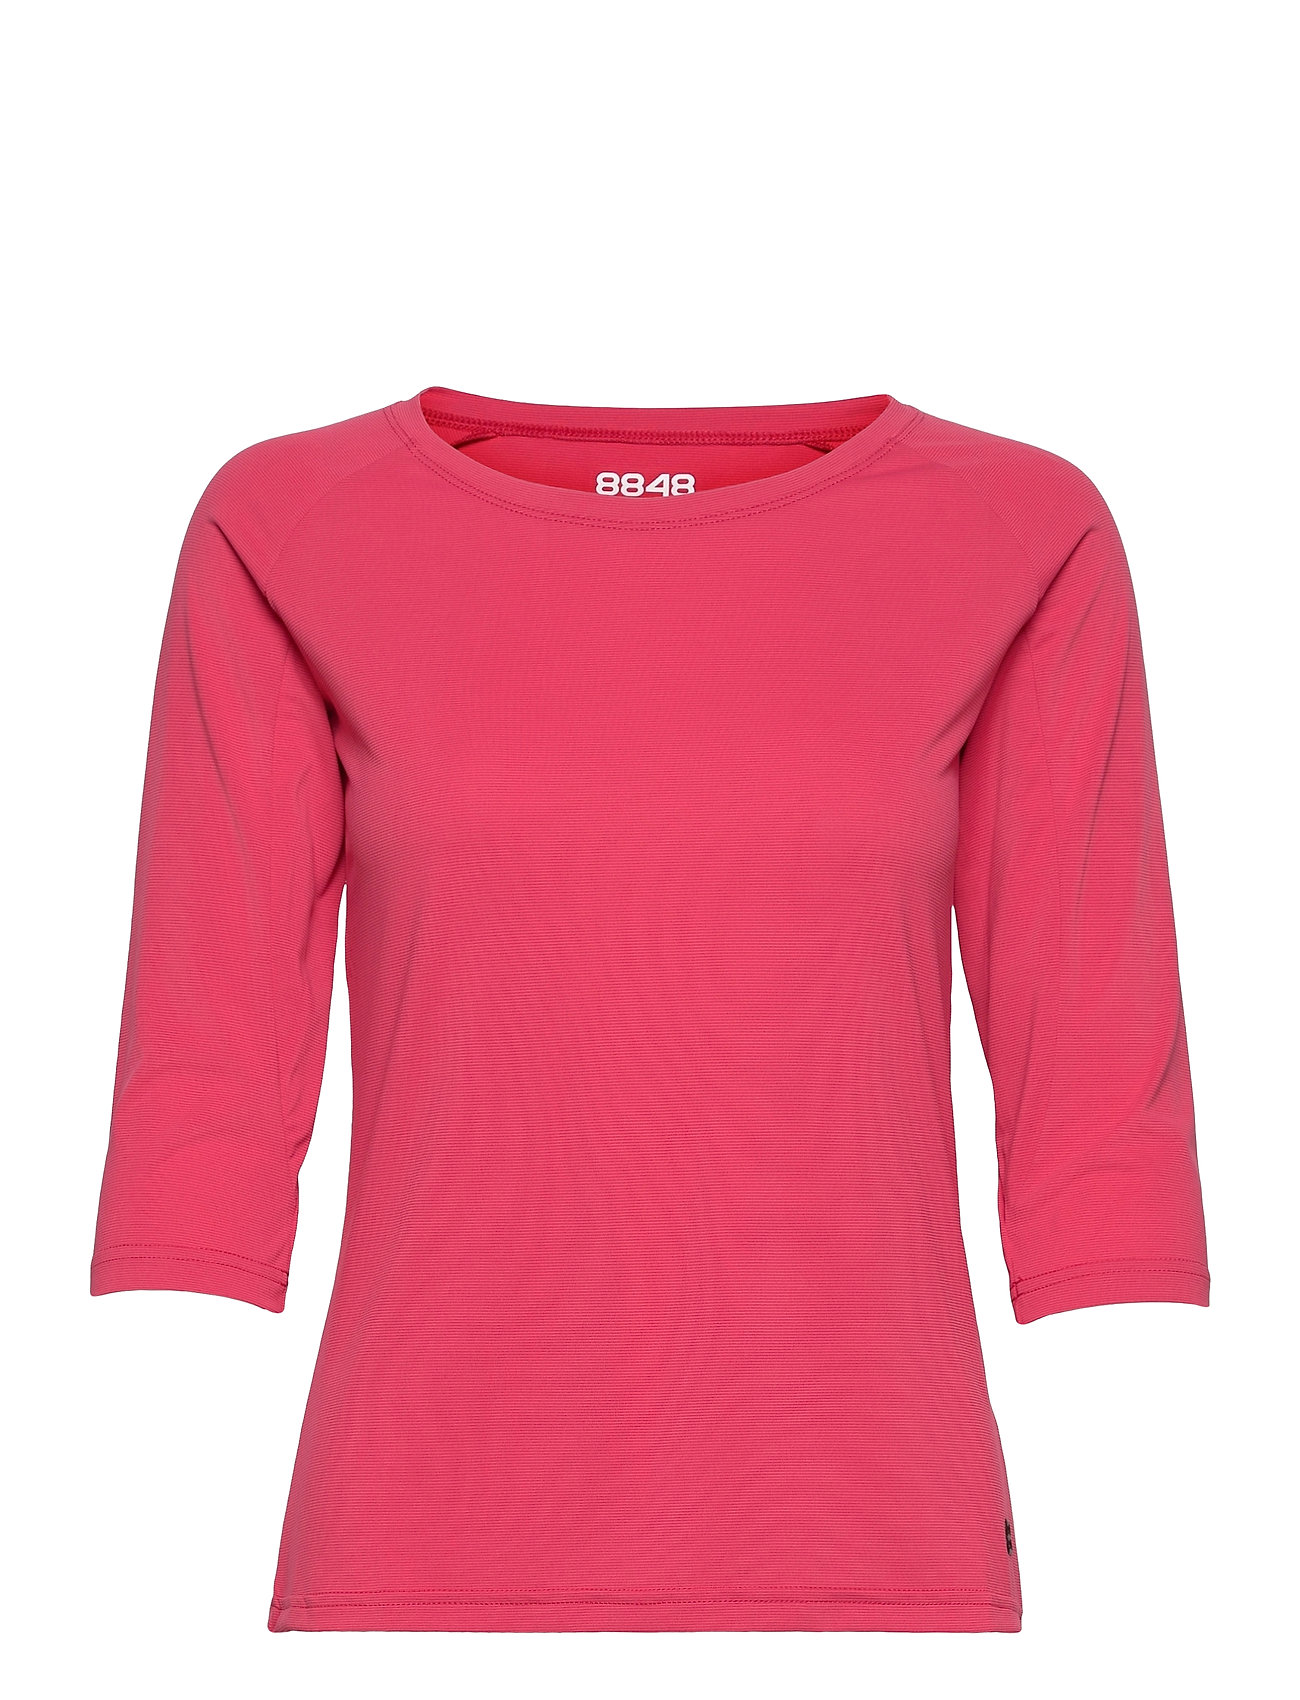 Dandilon W Tee T-shirts & Tops Long-sleeved Vaaleanpunainen 8848 Altitude